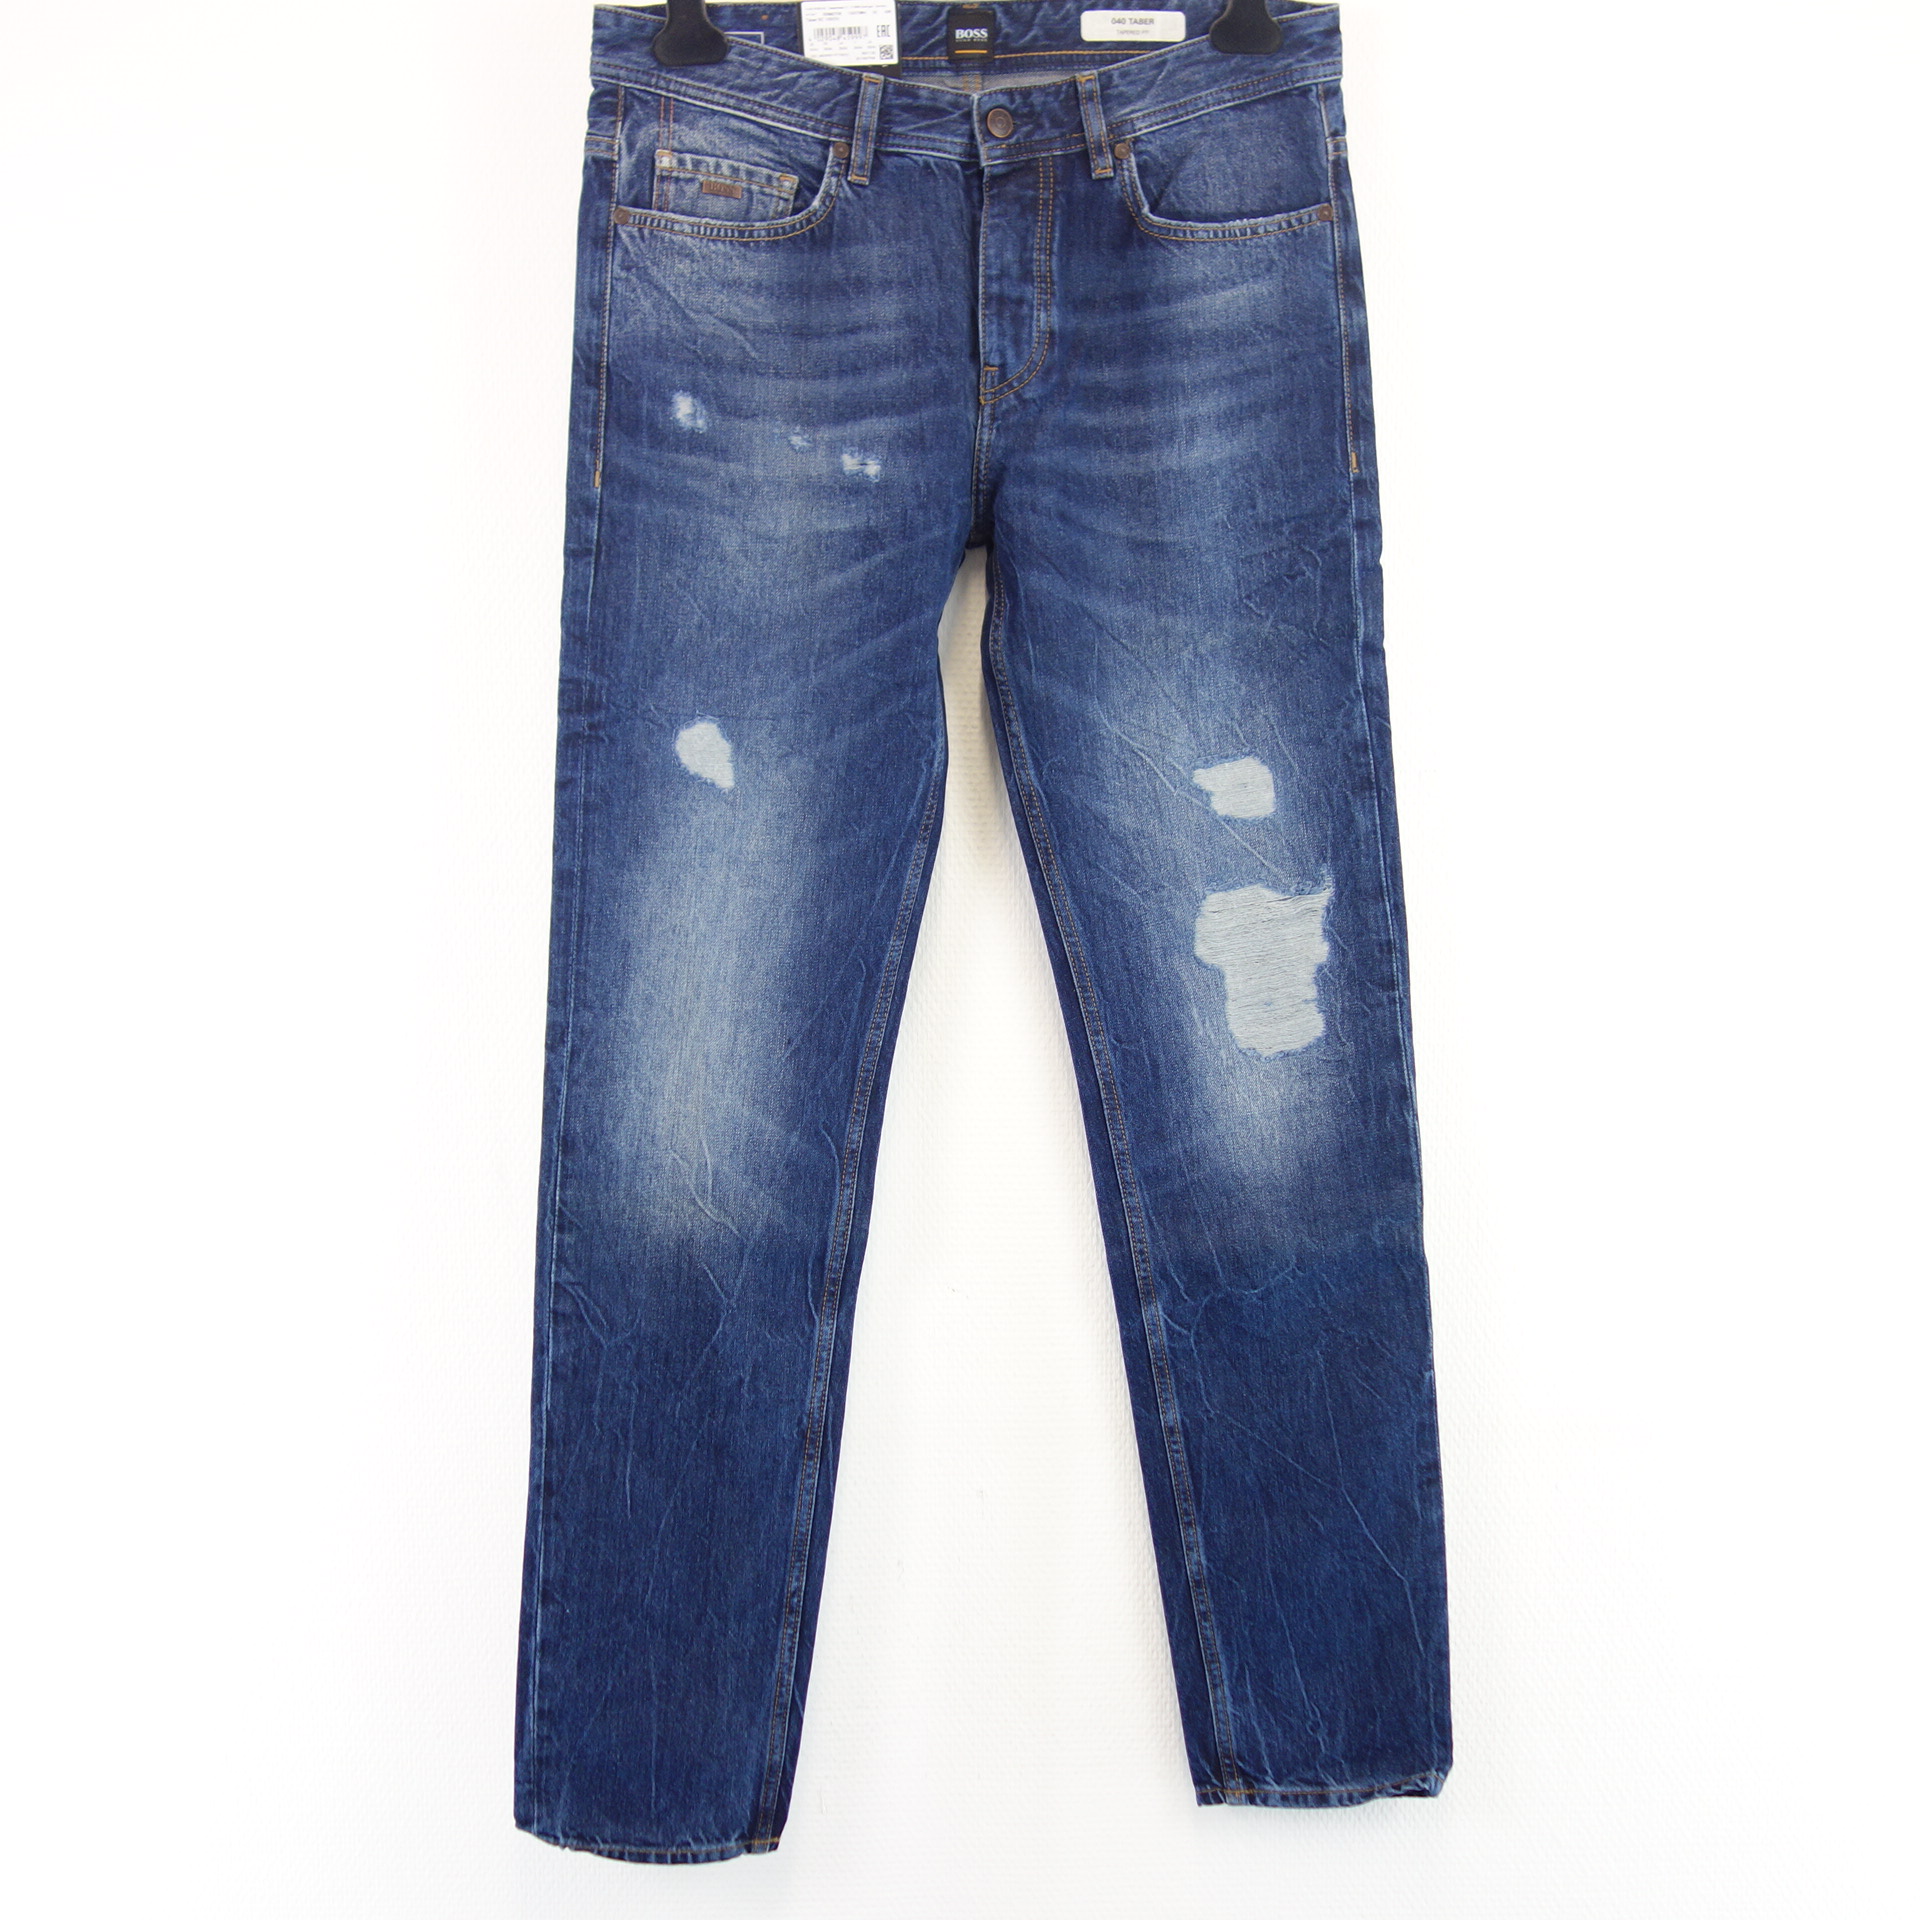 HUGO BOSS Herren Jeans Hose Jeanshose Blau Modell 040 Taber Tapered Fit L32